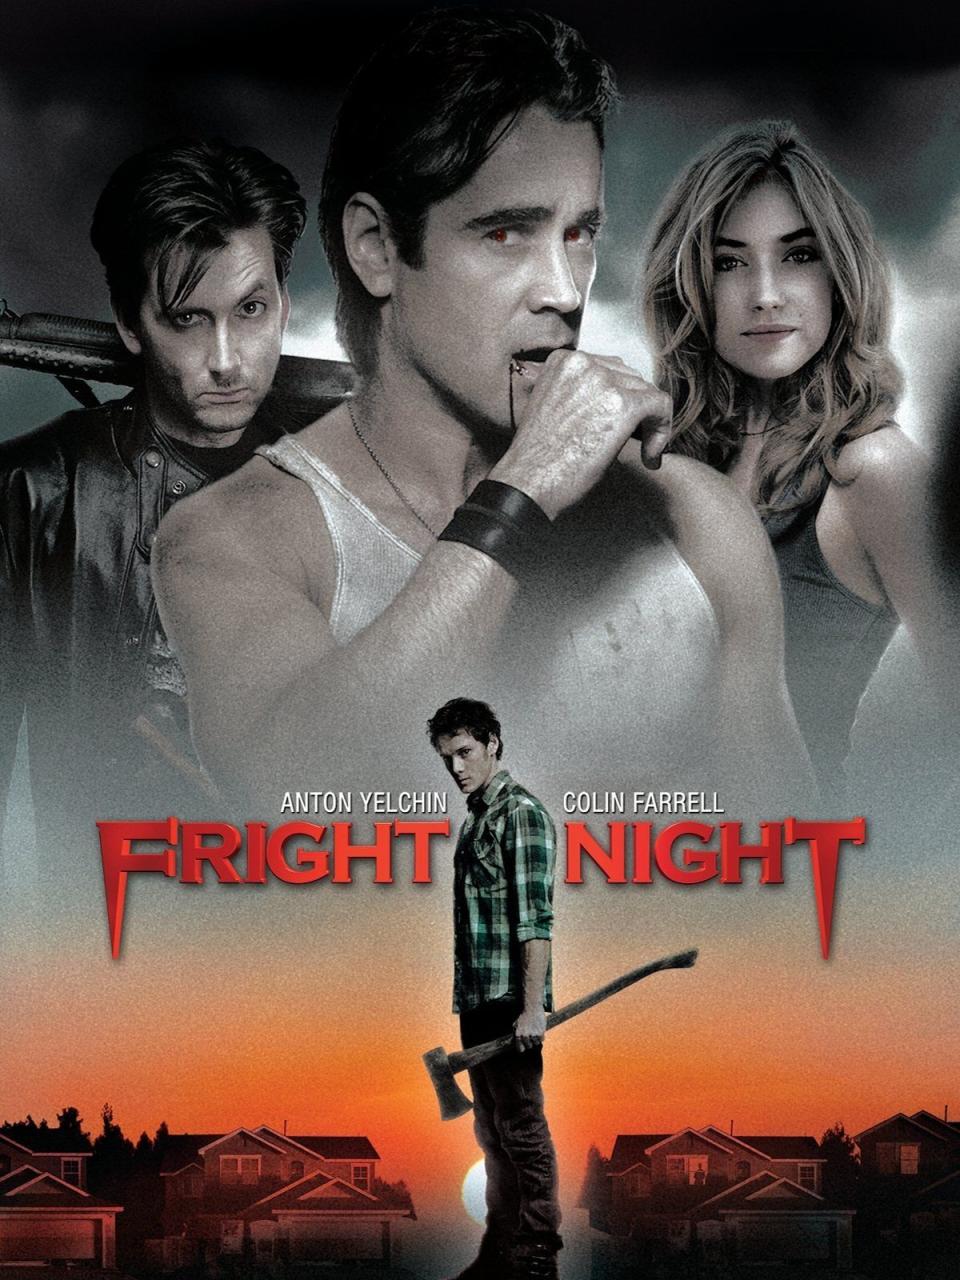 20) Fright Night (2011)